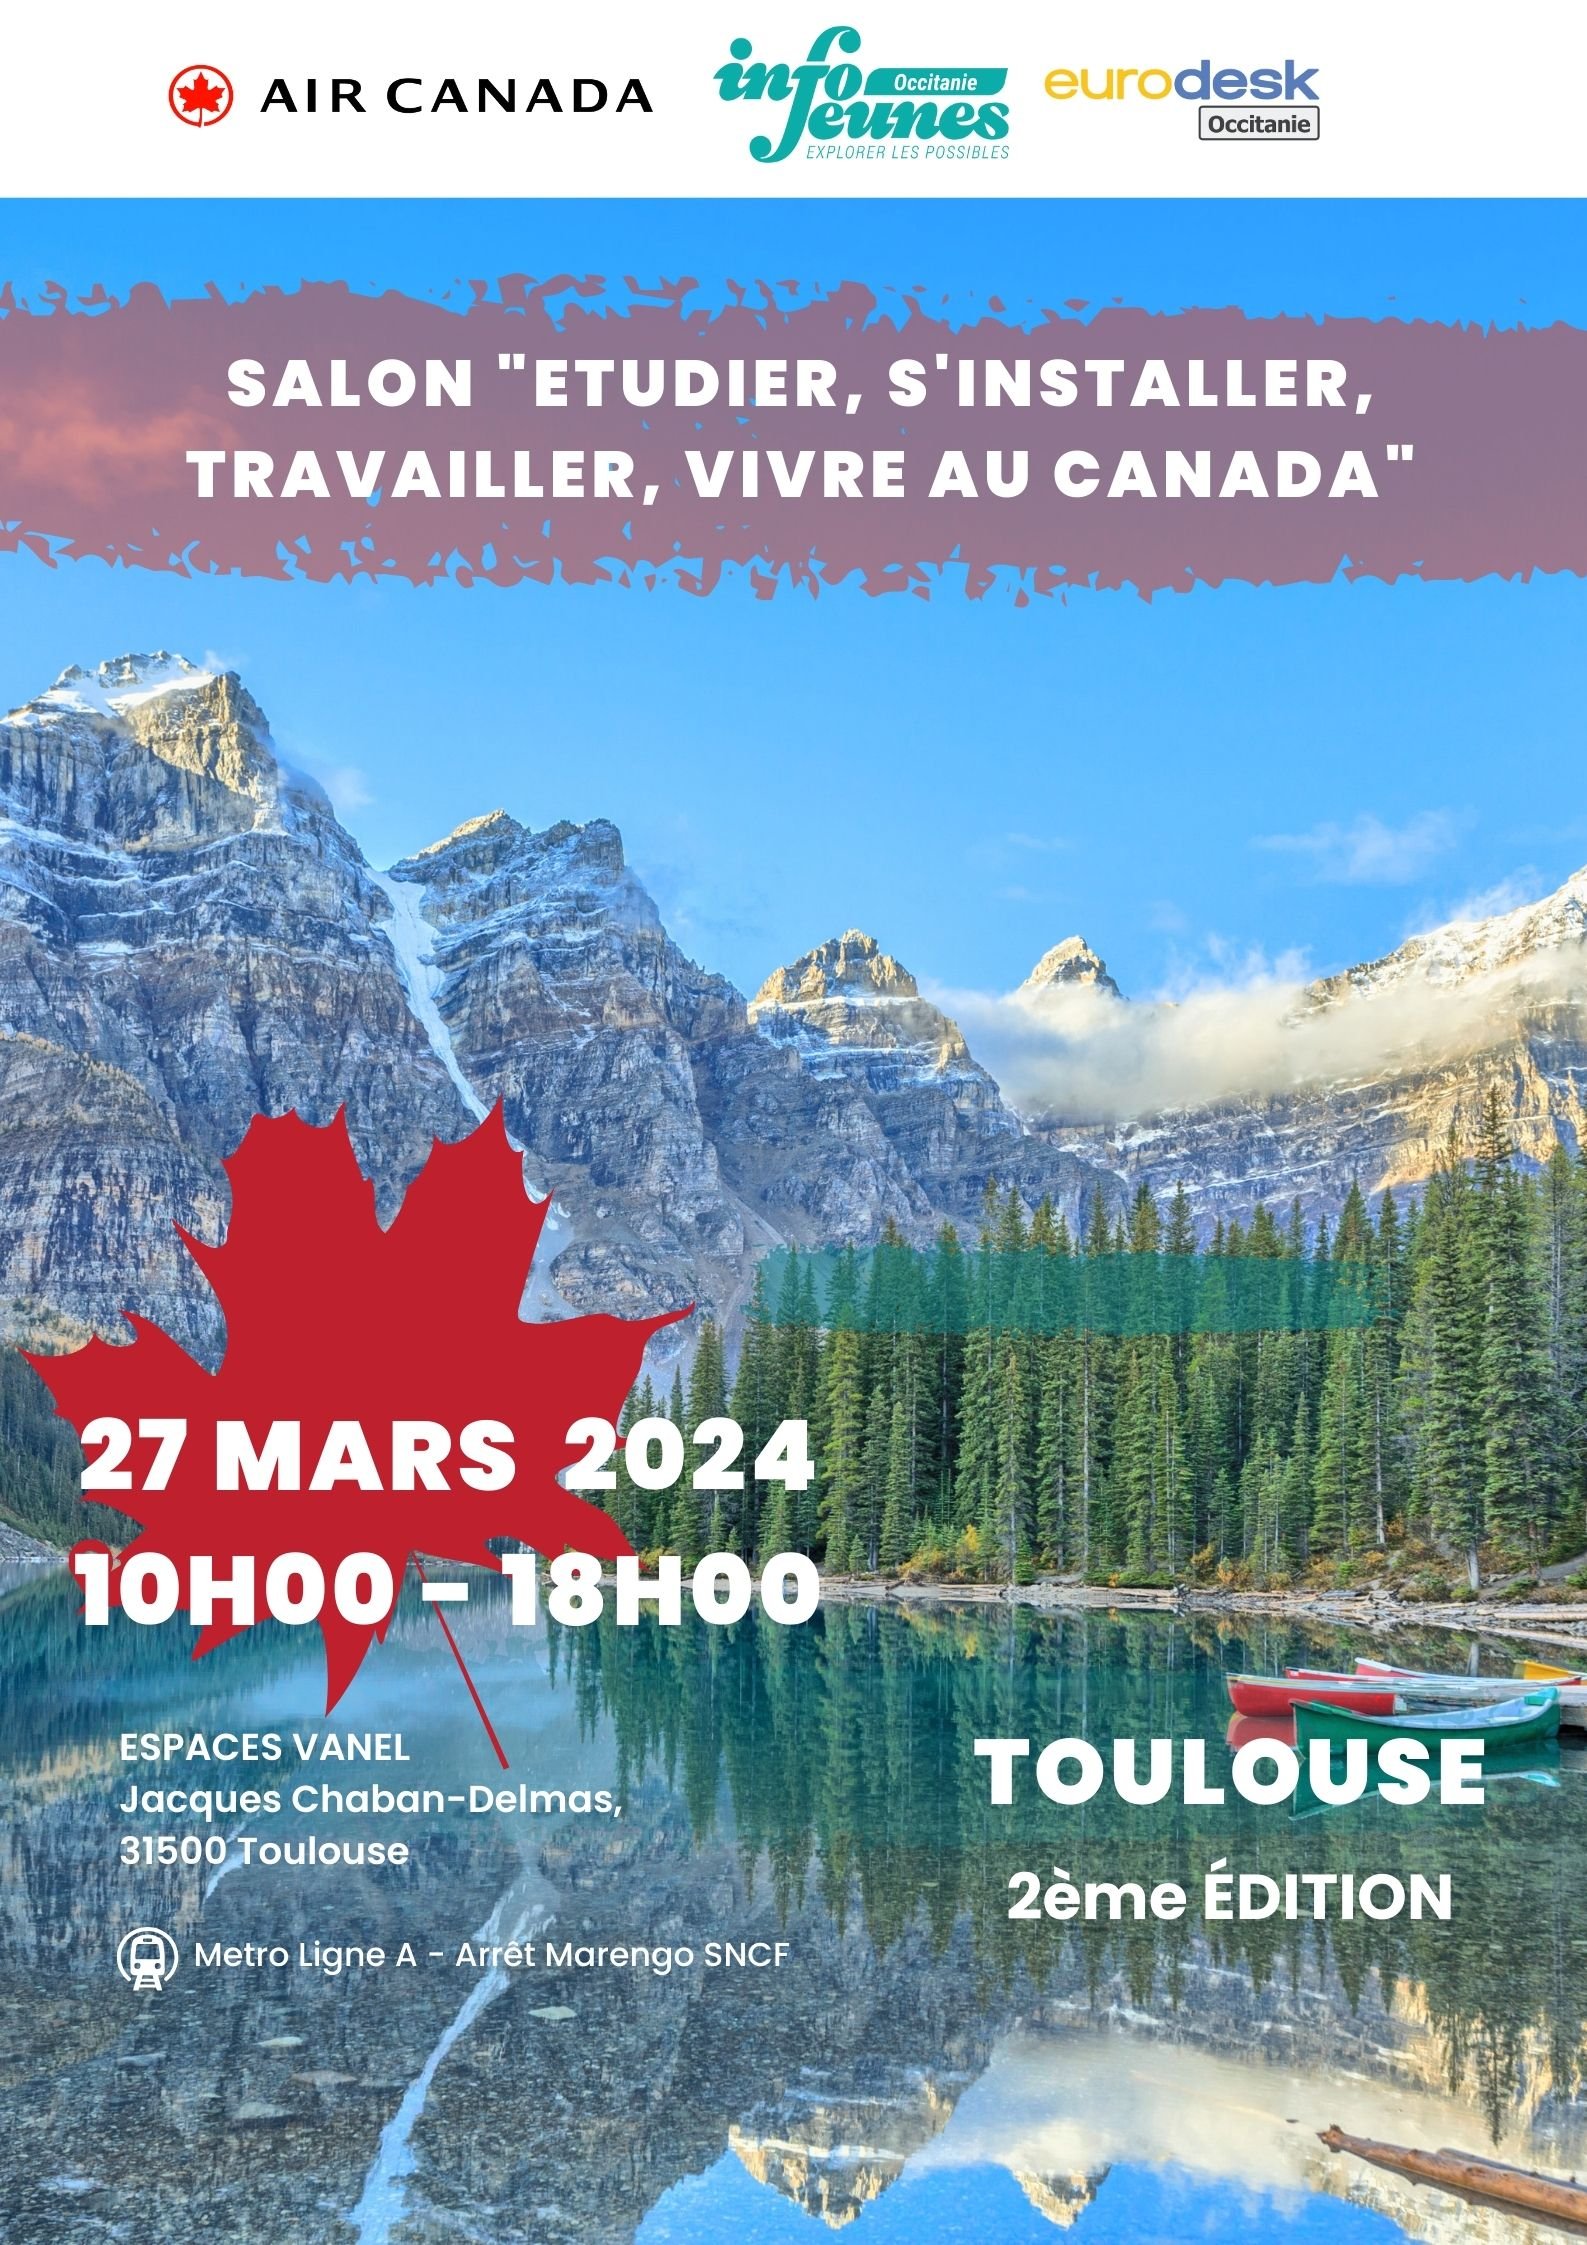 Visuel sans logos Salon Canada Toulouse 2024.jpg